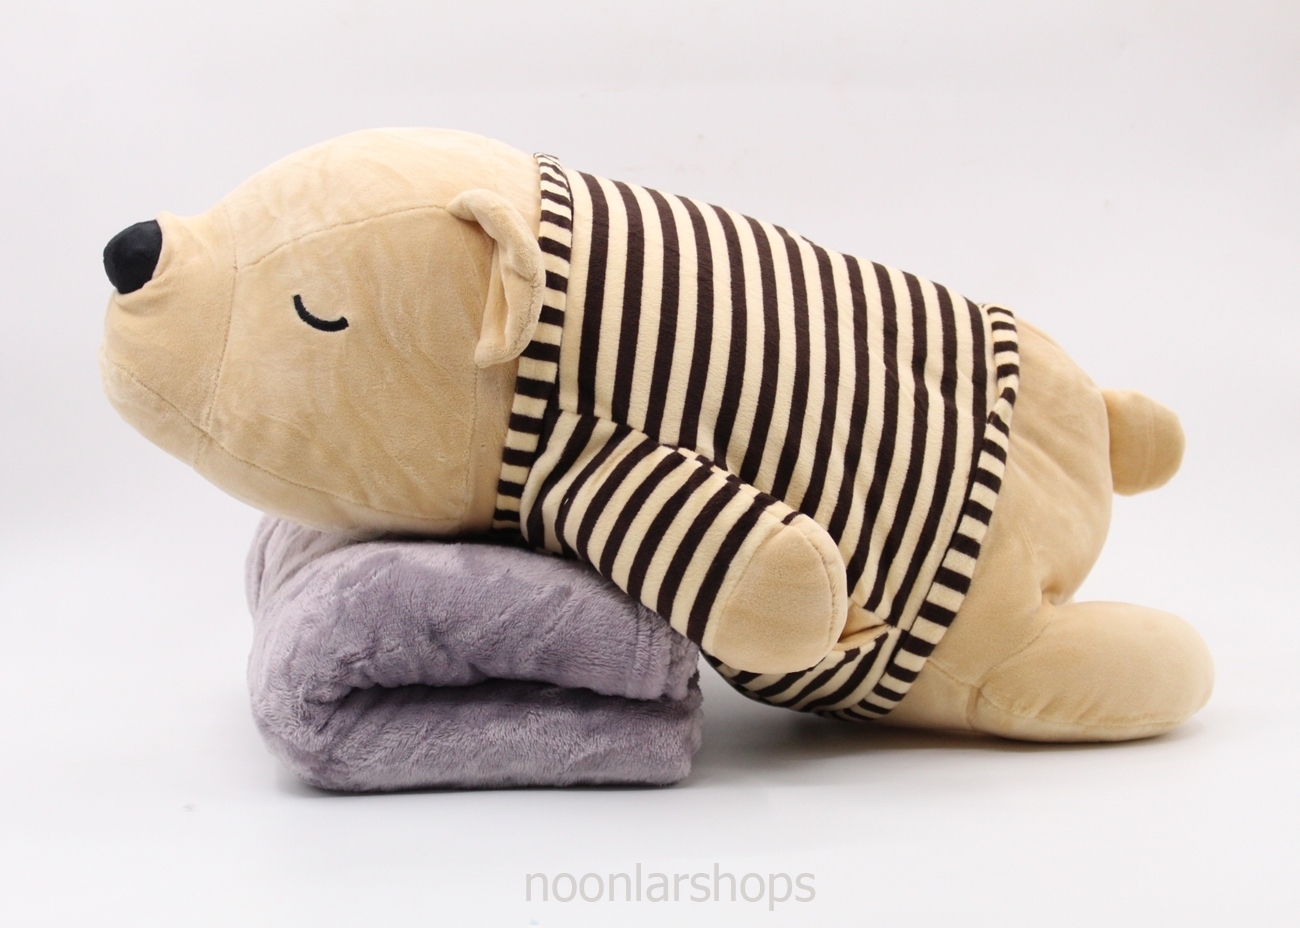 Room24th ตุ๊กตาหมอนผ้าห่ม หมอนหนุน หมอนข้าง หมีหลับ หมีนอน น่ารัก วินเทจ